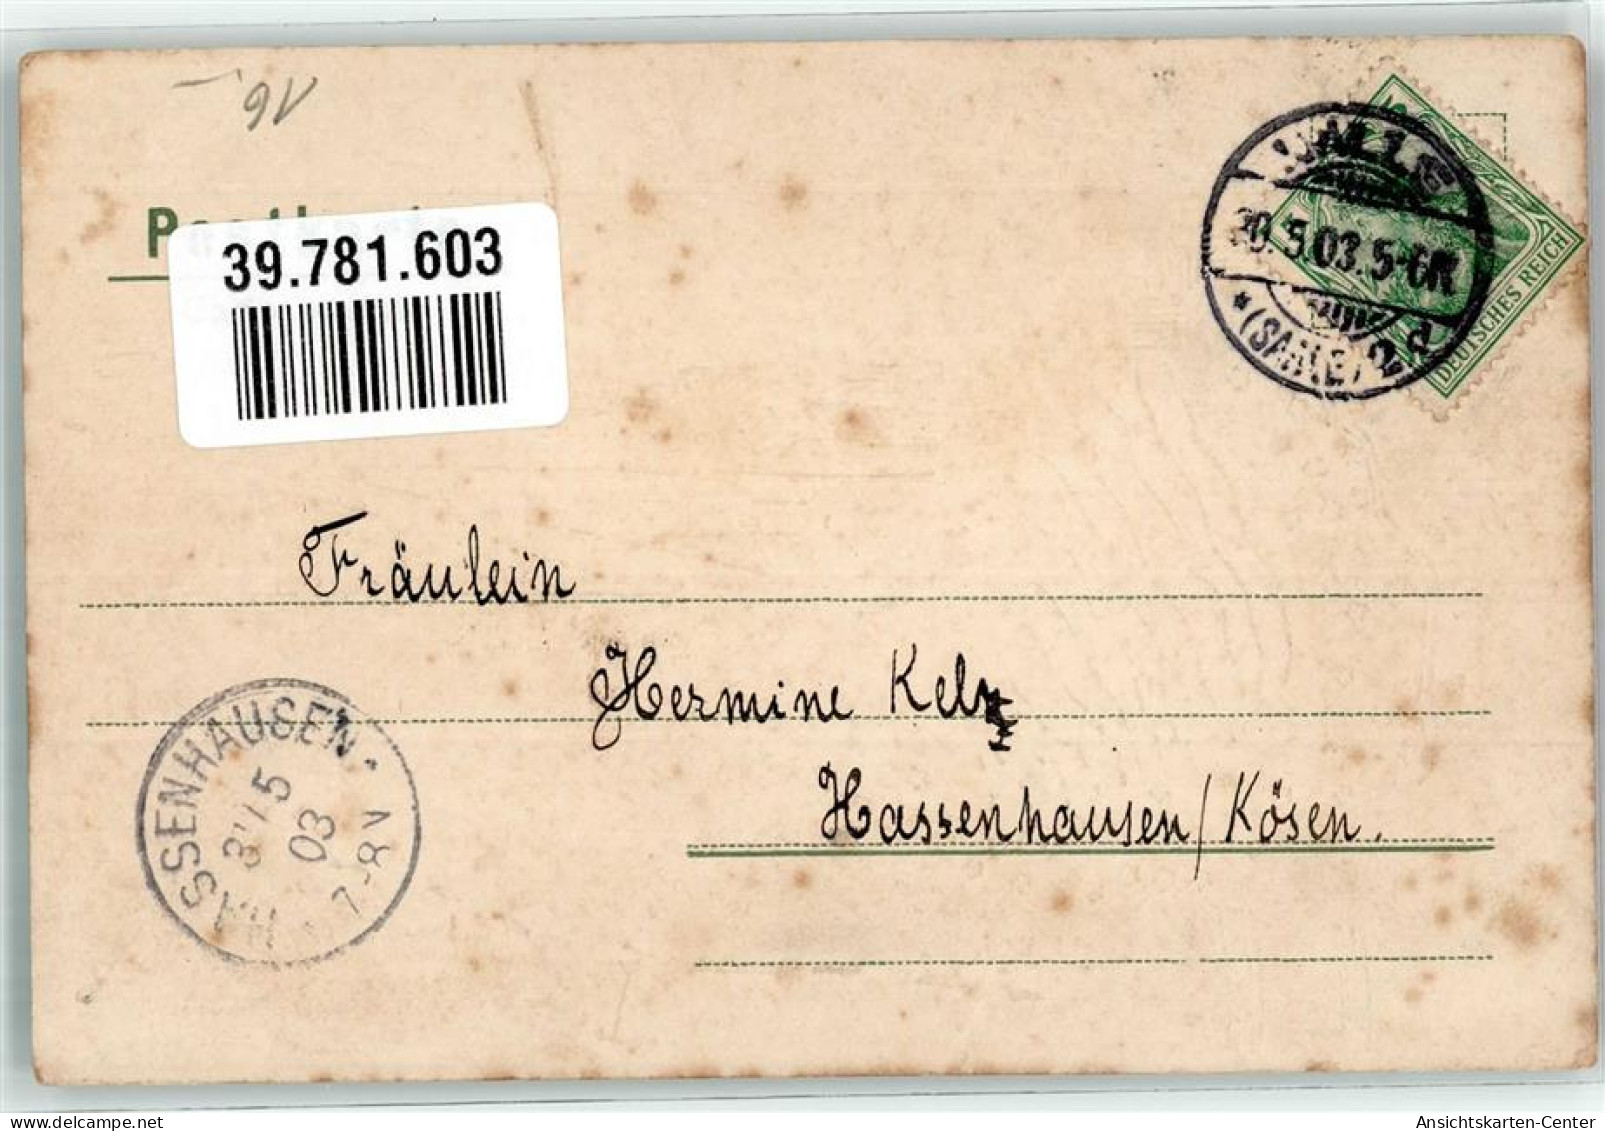 39781603 - Frau Sign. Mailick Verlag Erika Nr.1059 - Pinksteren